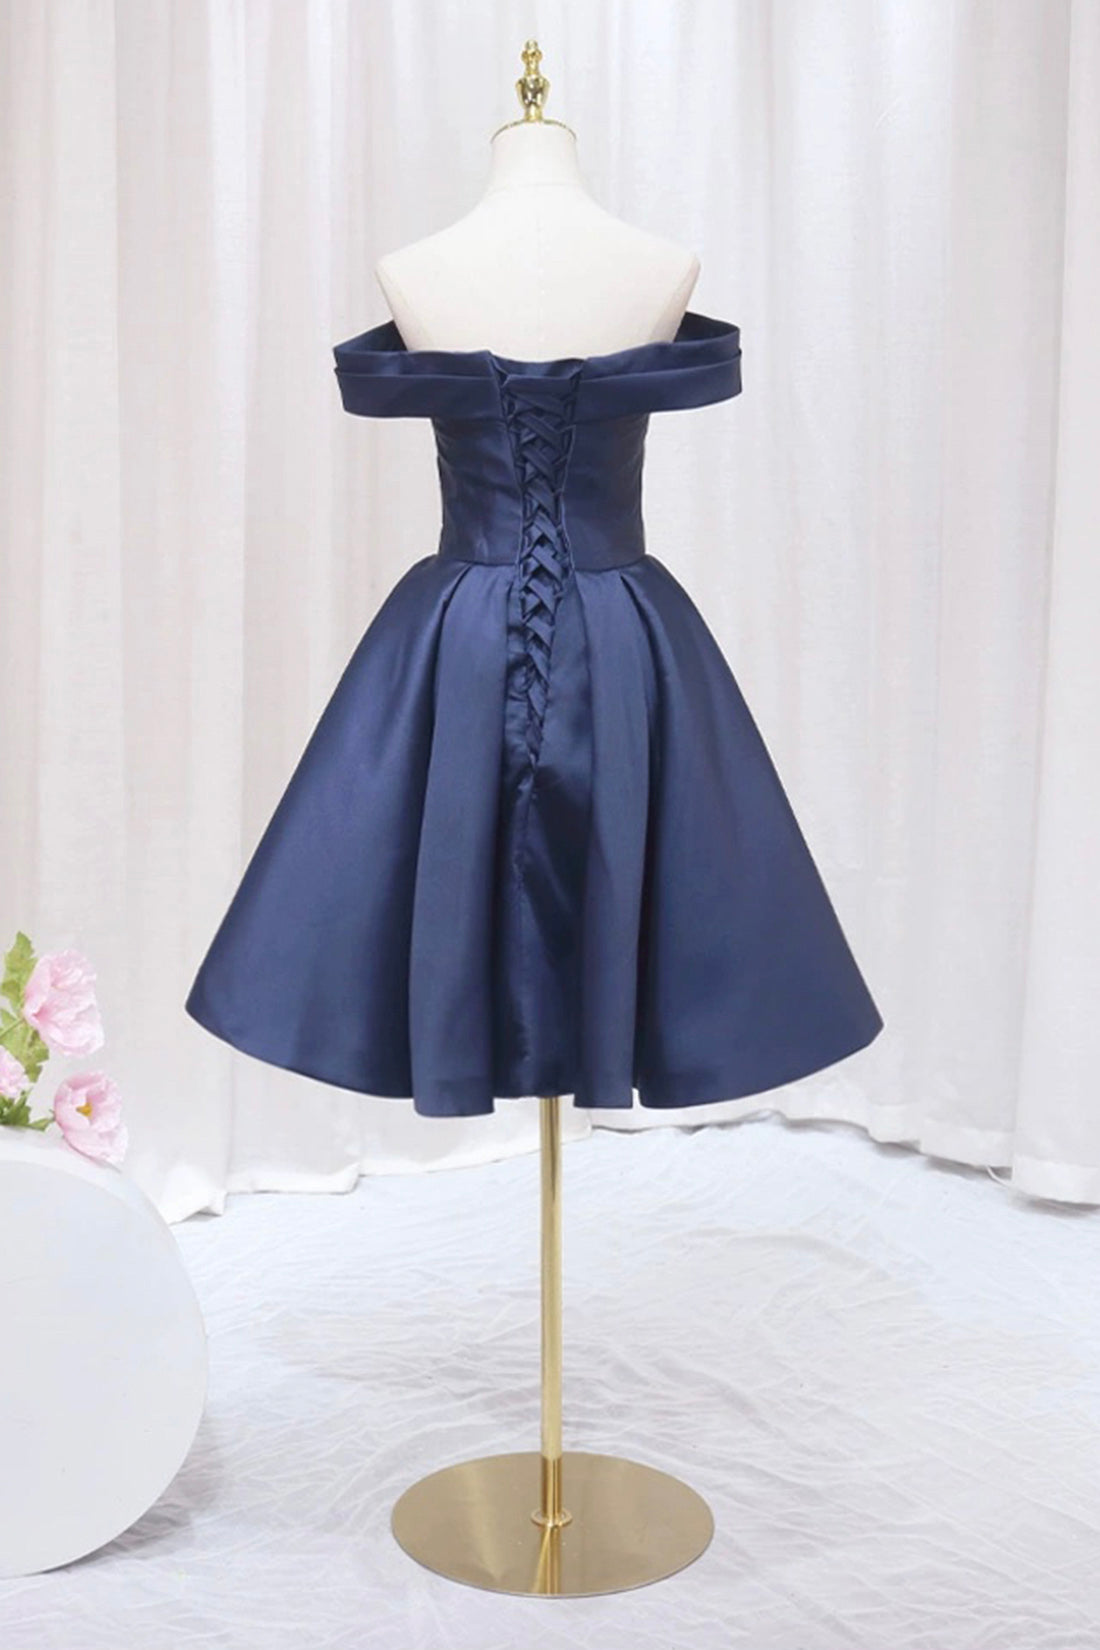 Party Dress Websites, Blue Knee Length Satin Short Prom Dress, Off the Shoulder Blue Homecoming Dress